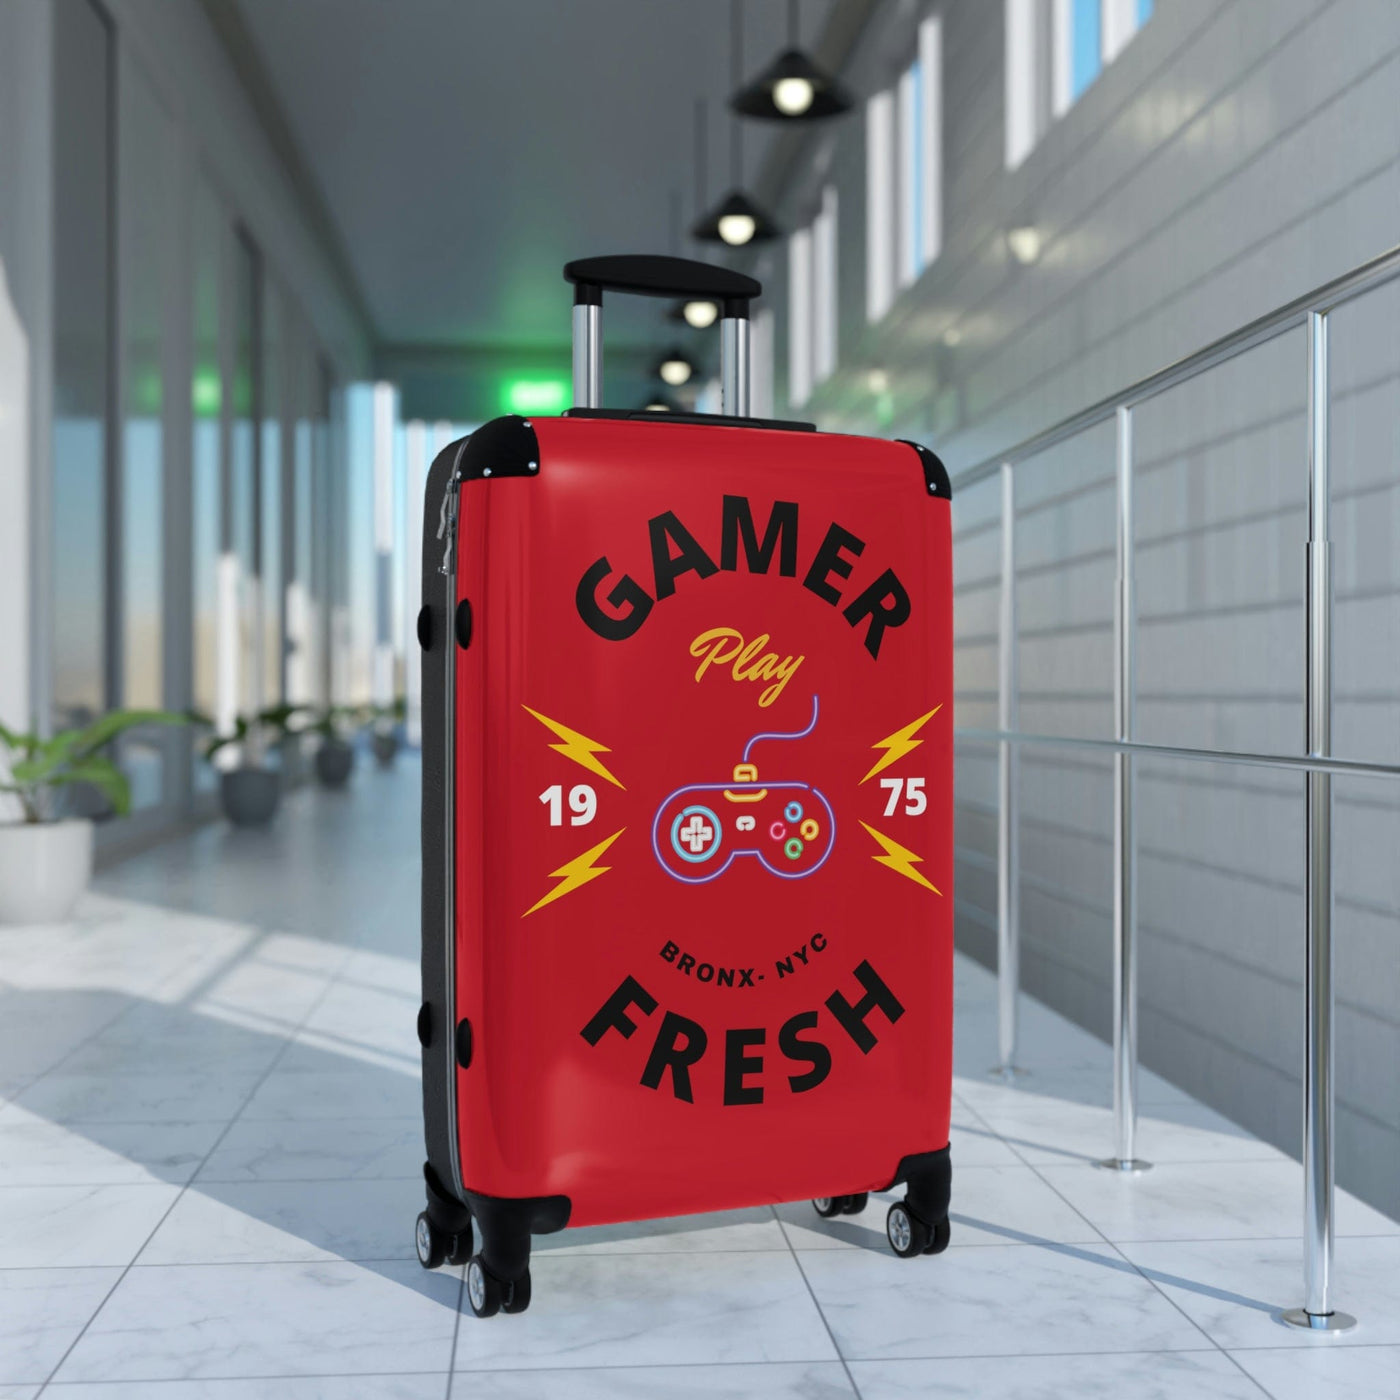 Gamer Fresh Journey's Premium Gamer Since 75' Gaming Luggage Suitcases | Dark Red